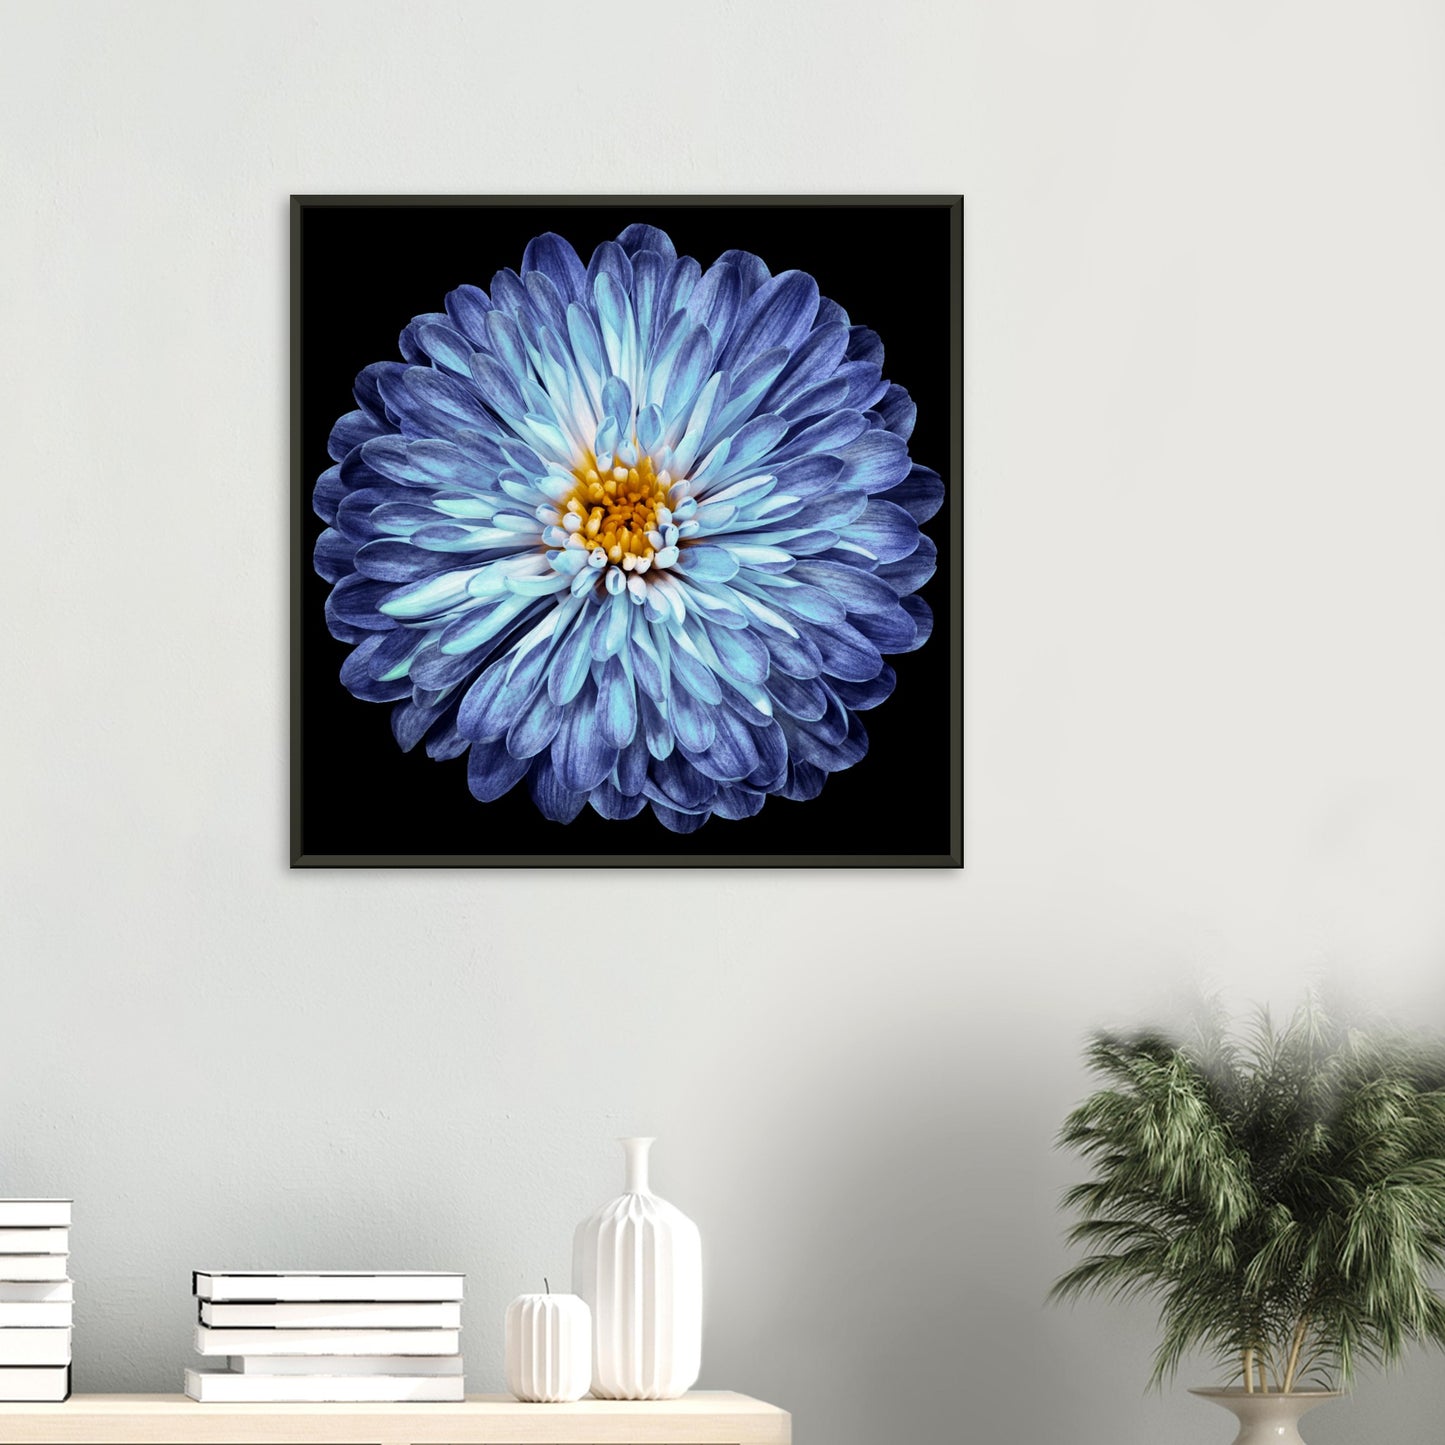 Purple-blue chrysanthemum